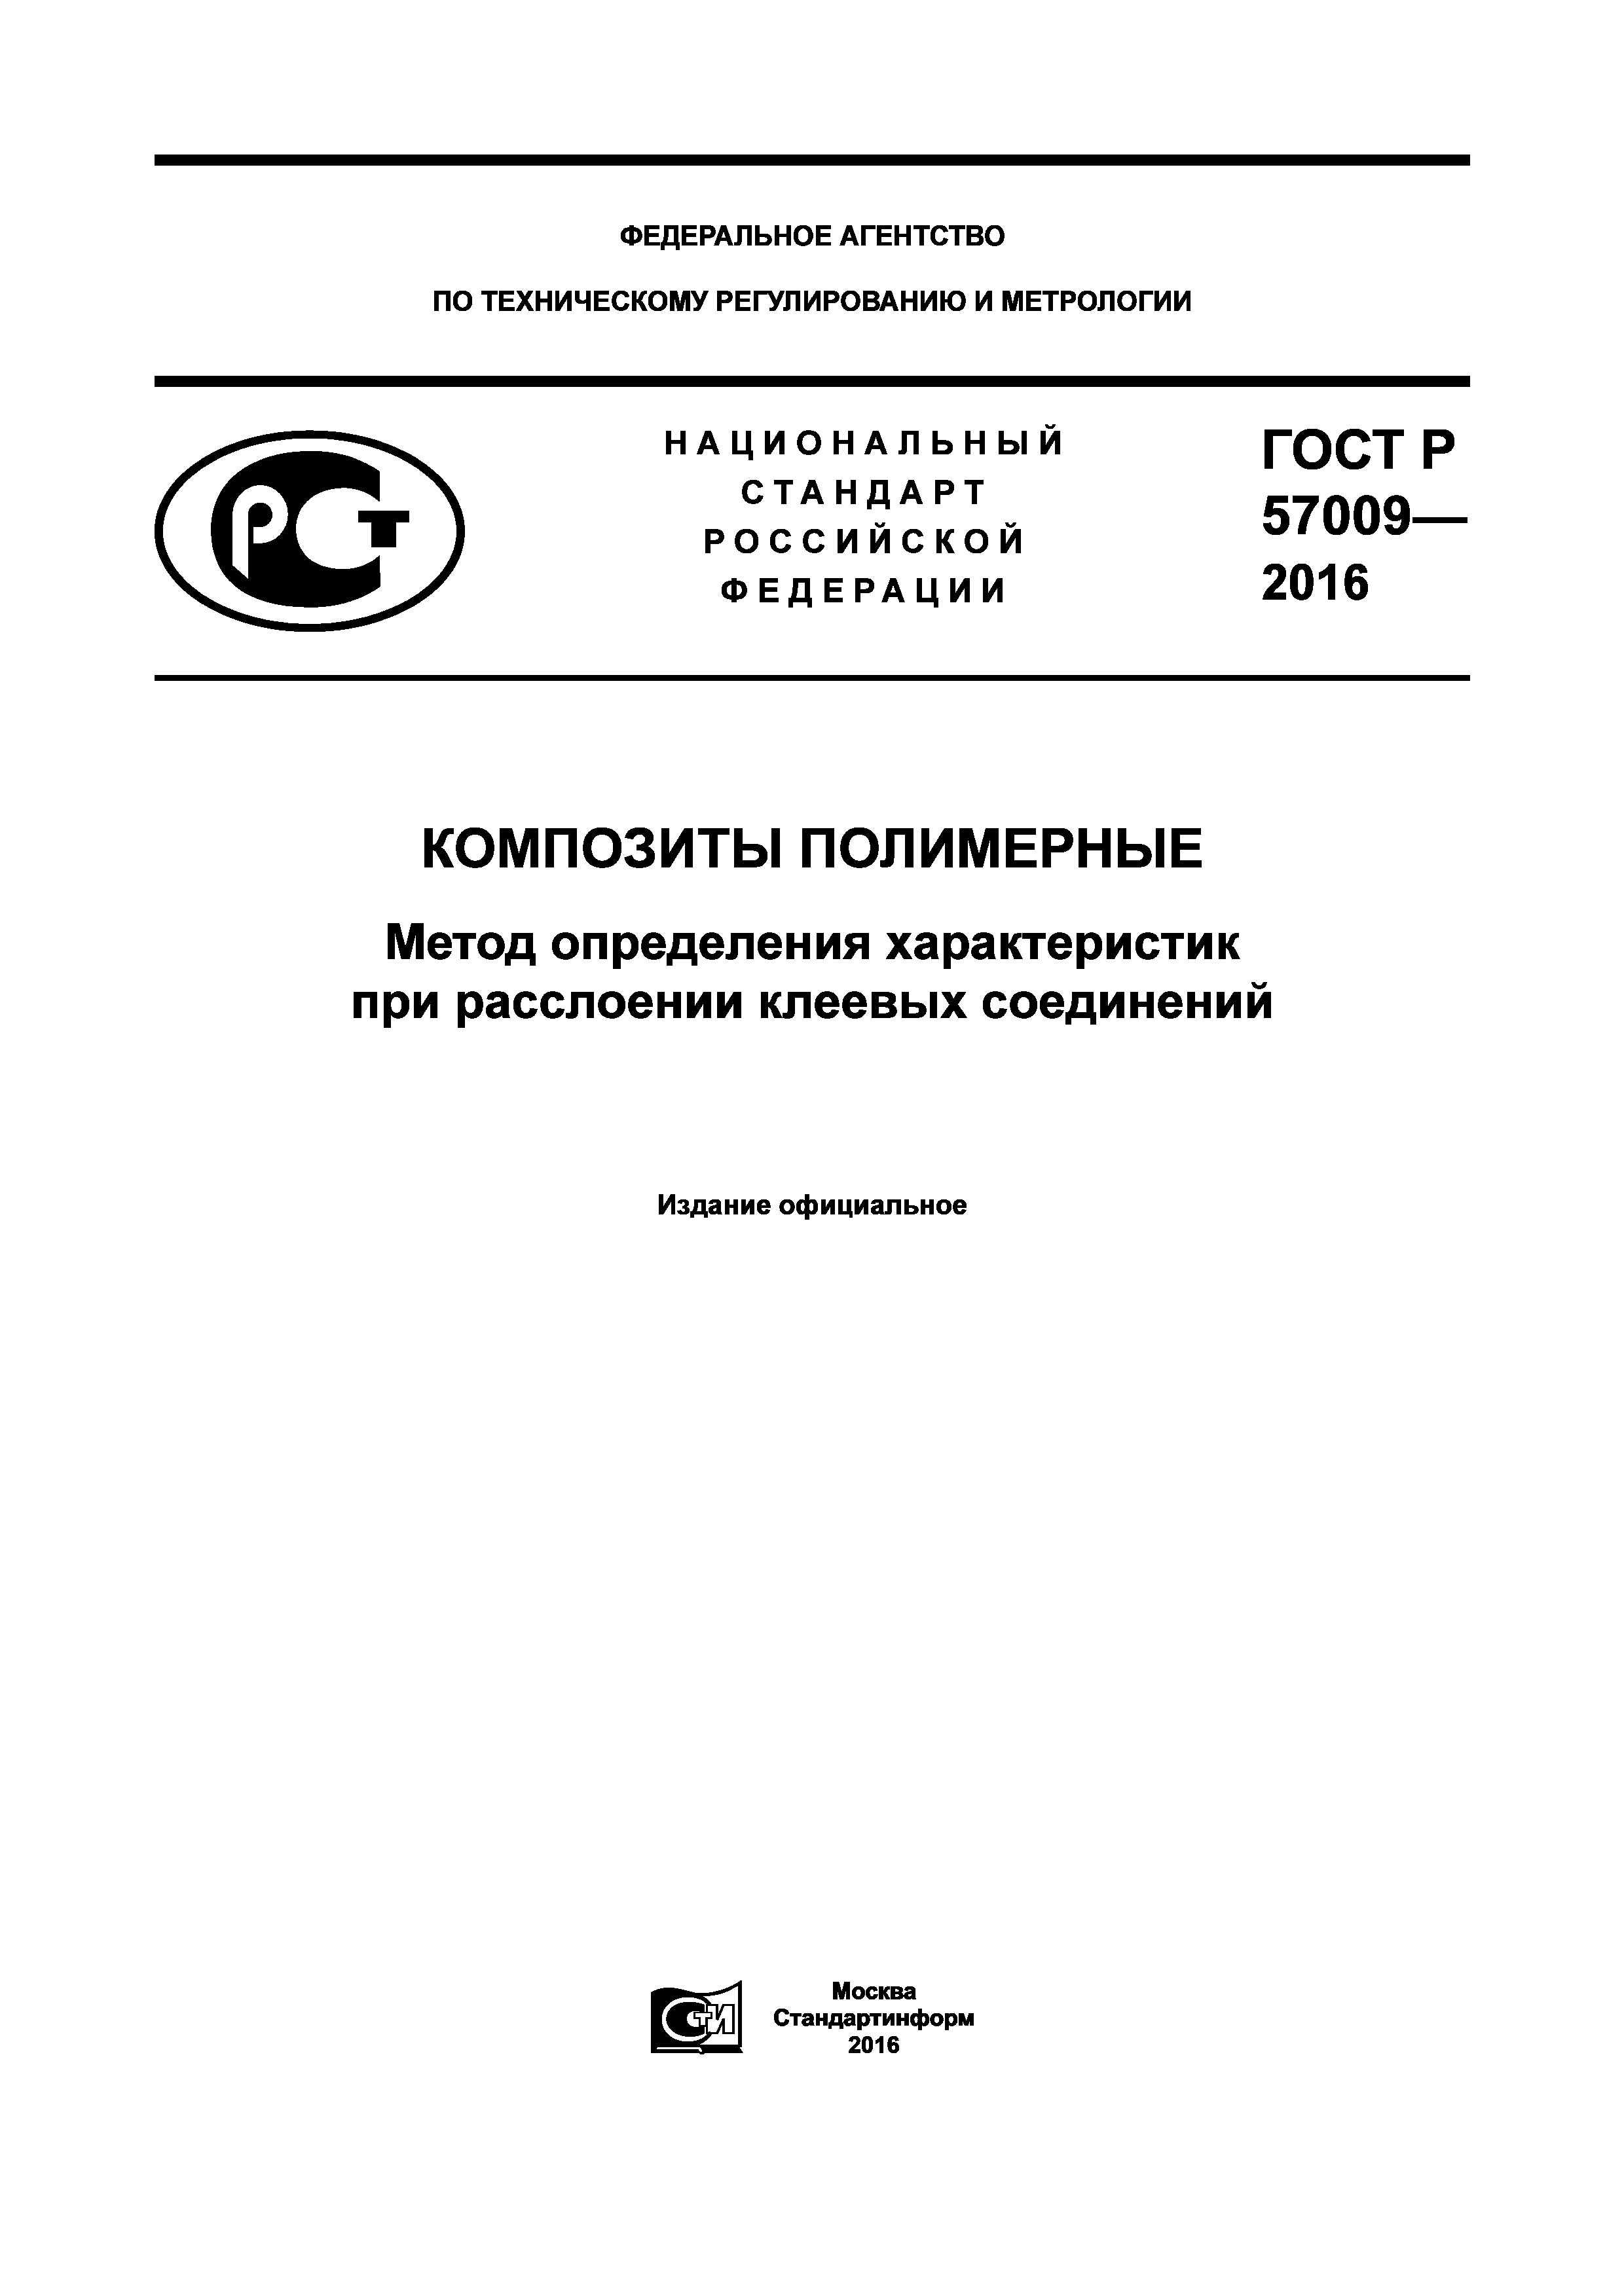 ГОСТ Р 57009-2016